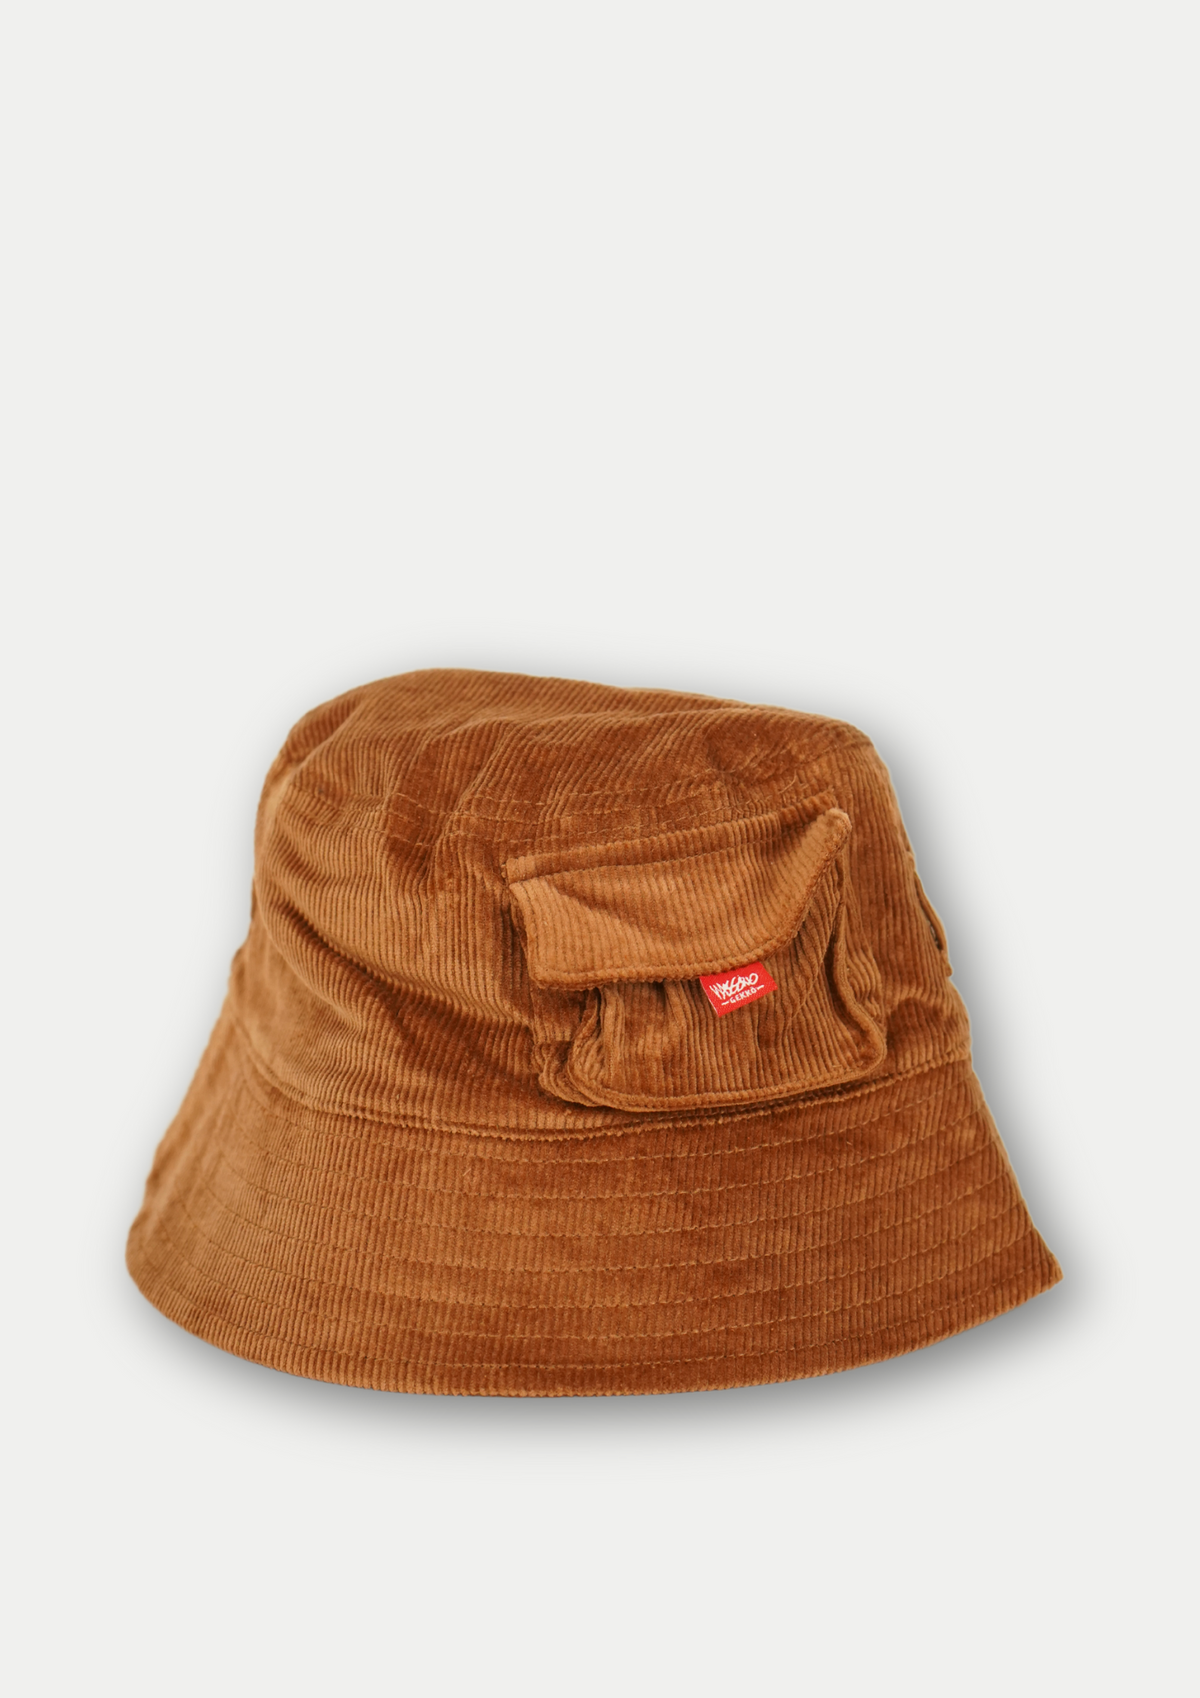 Mossimo Gekko Brown Bucket Hat with Pencil Holder